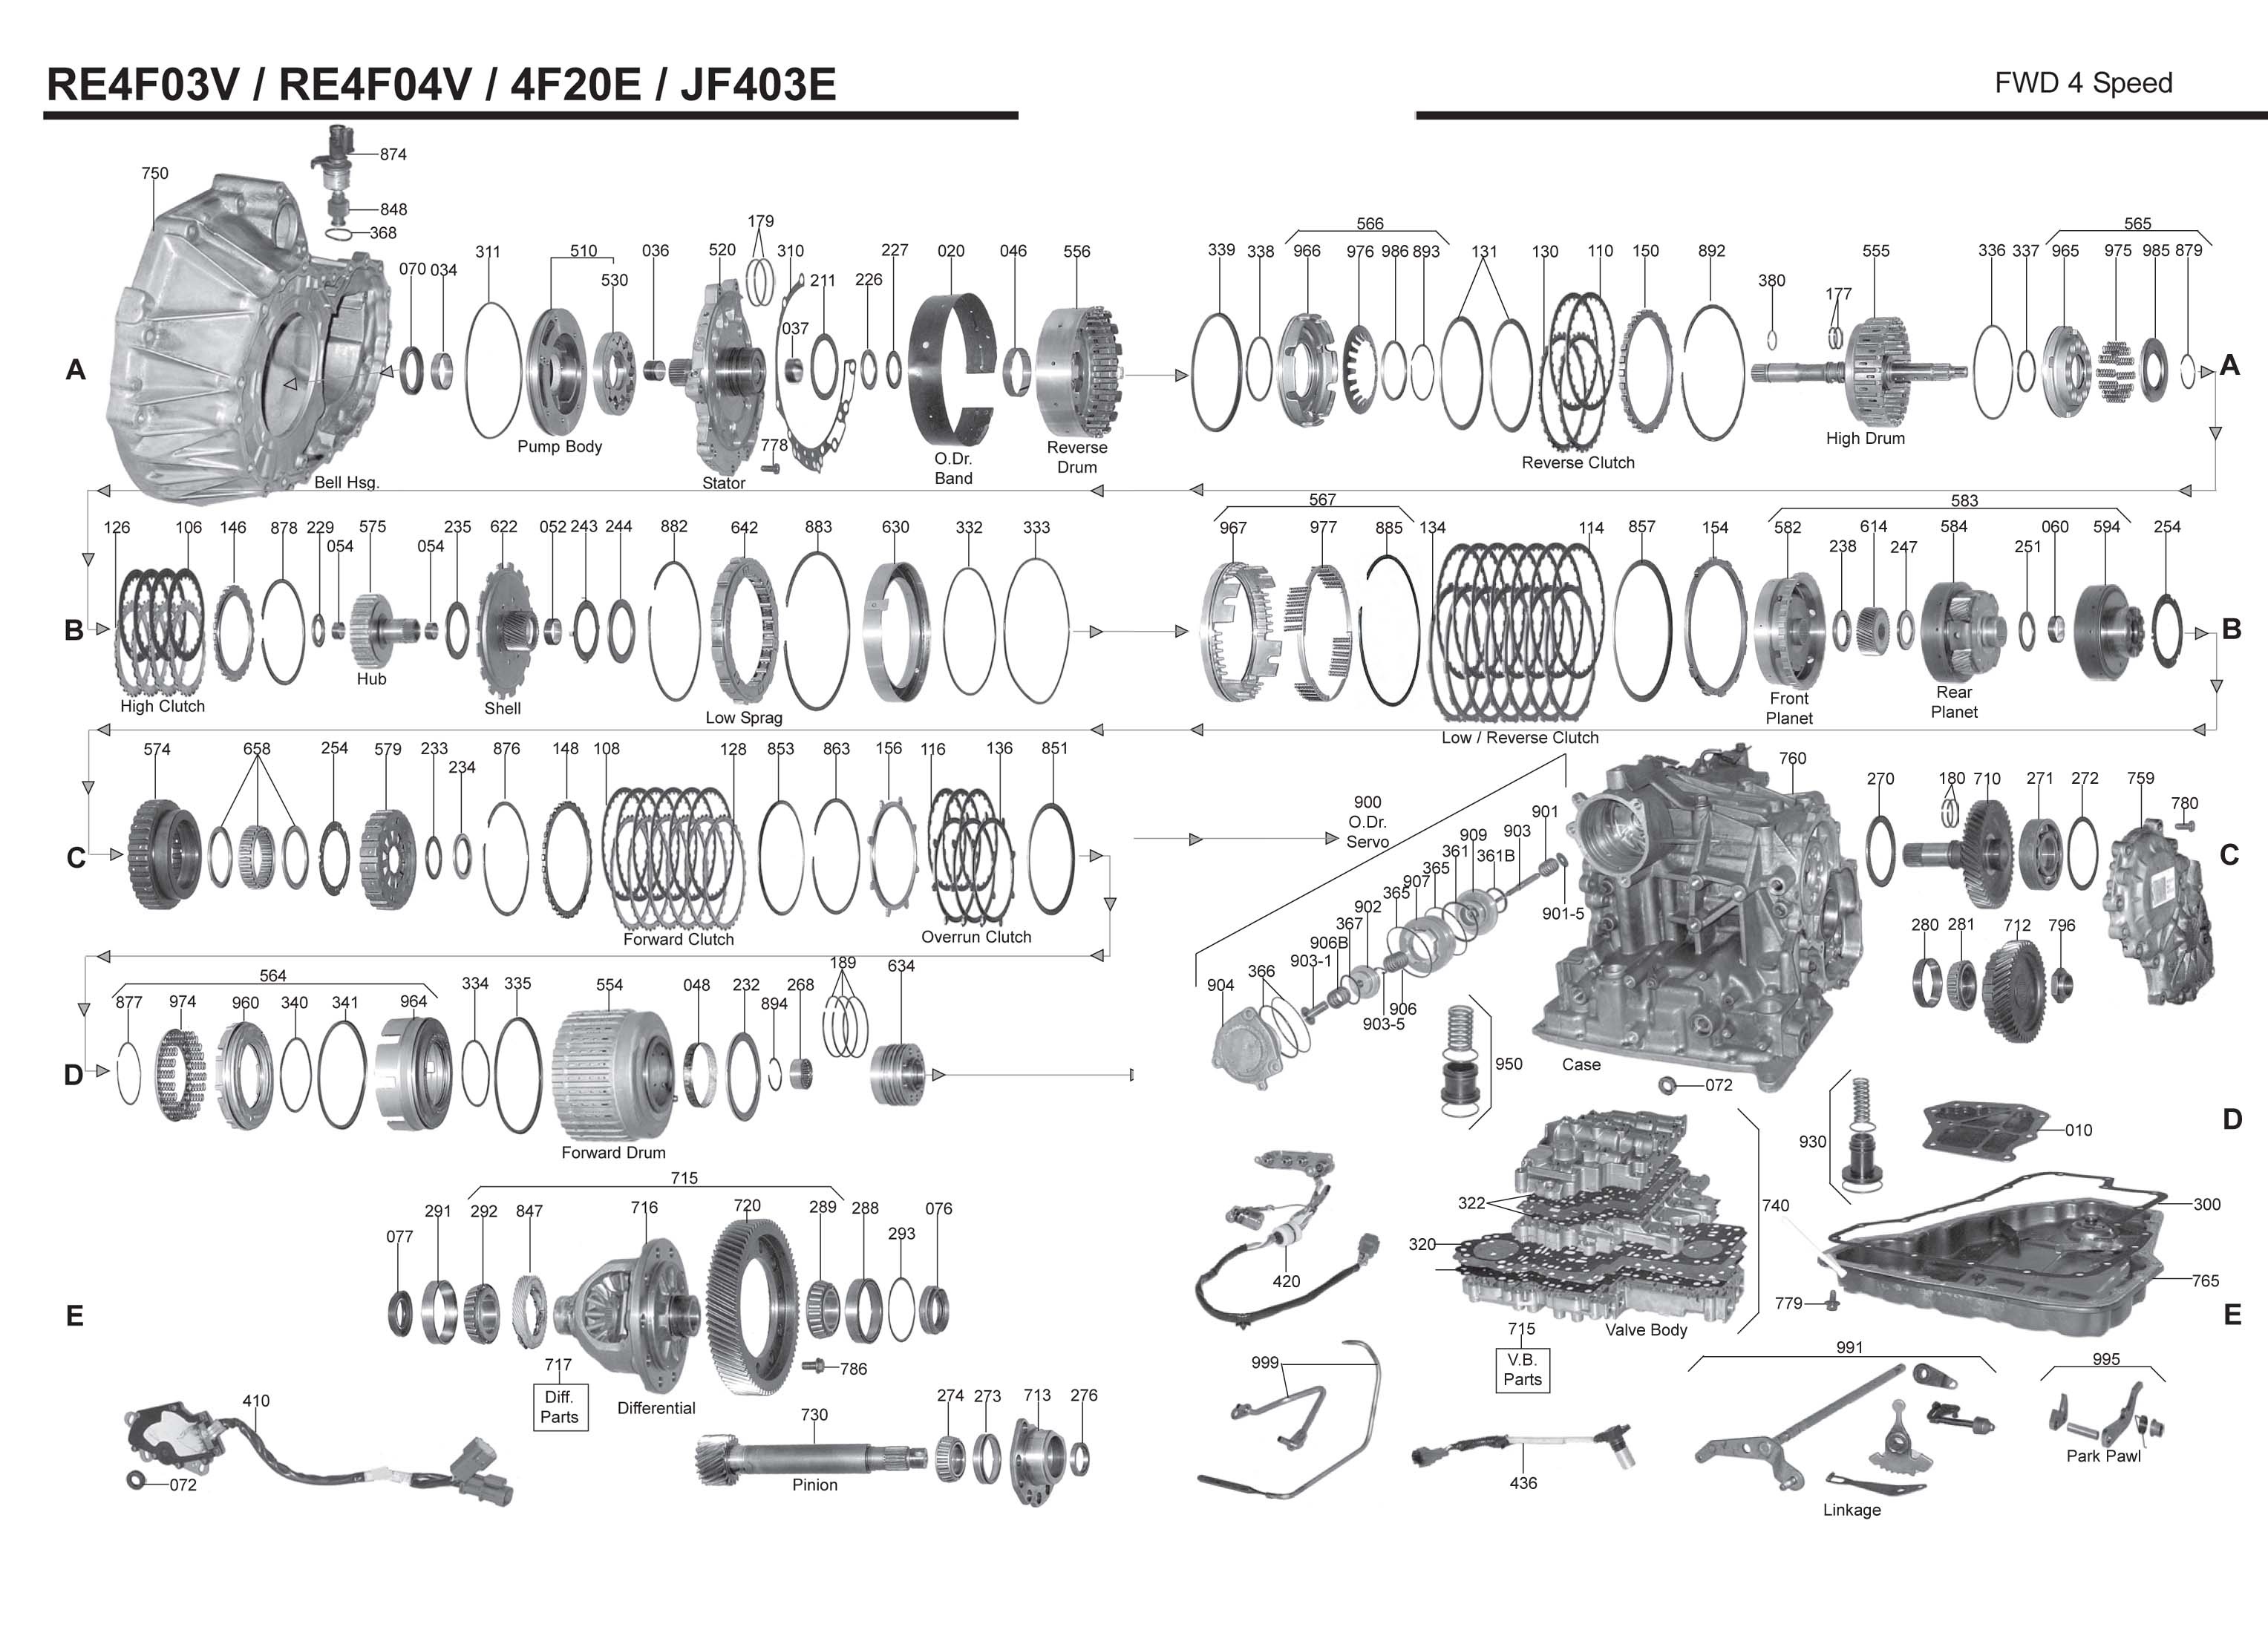 Jf420 engine parts